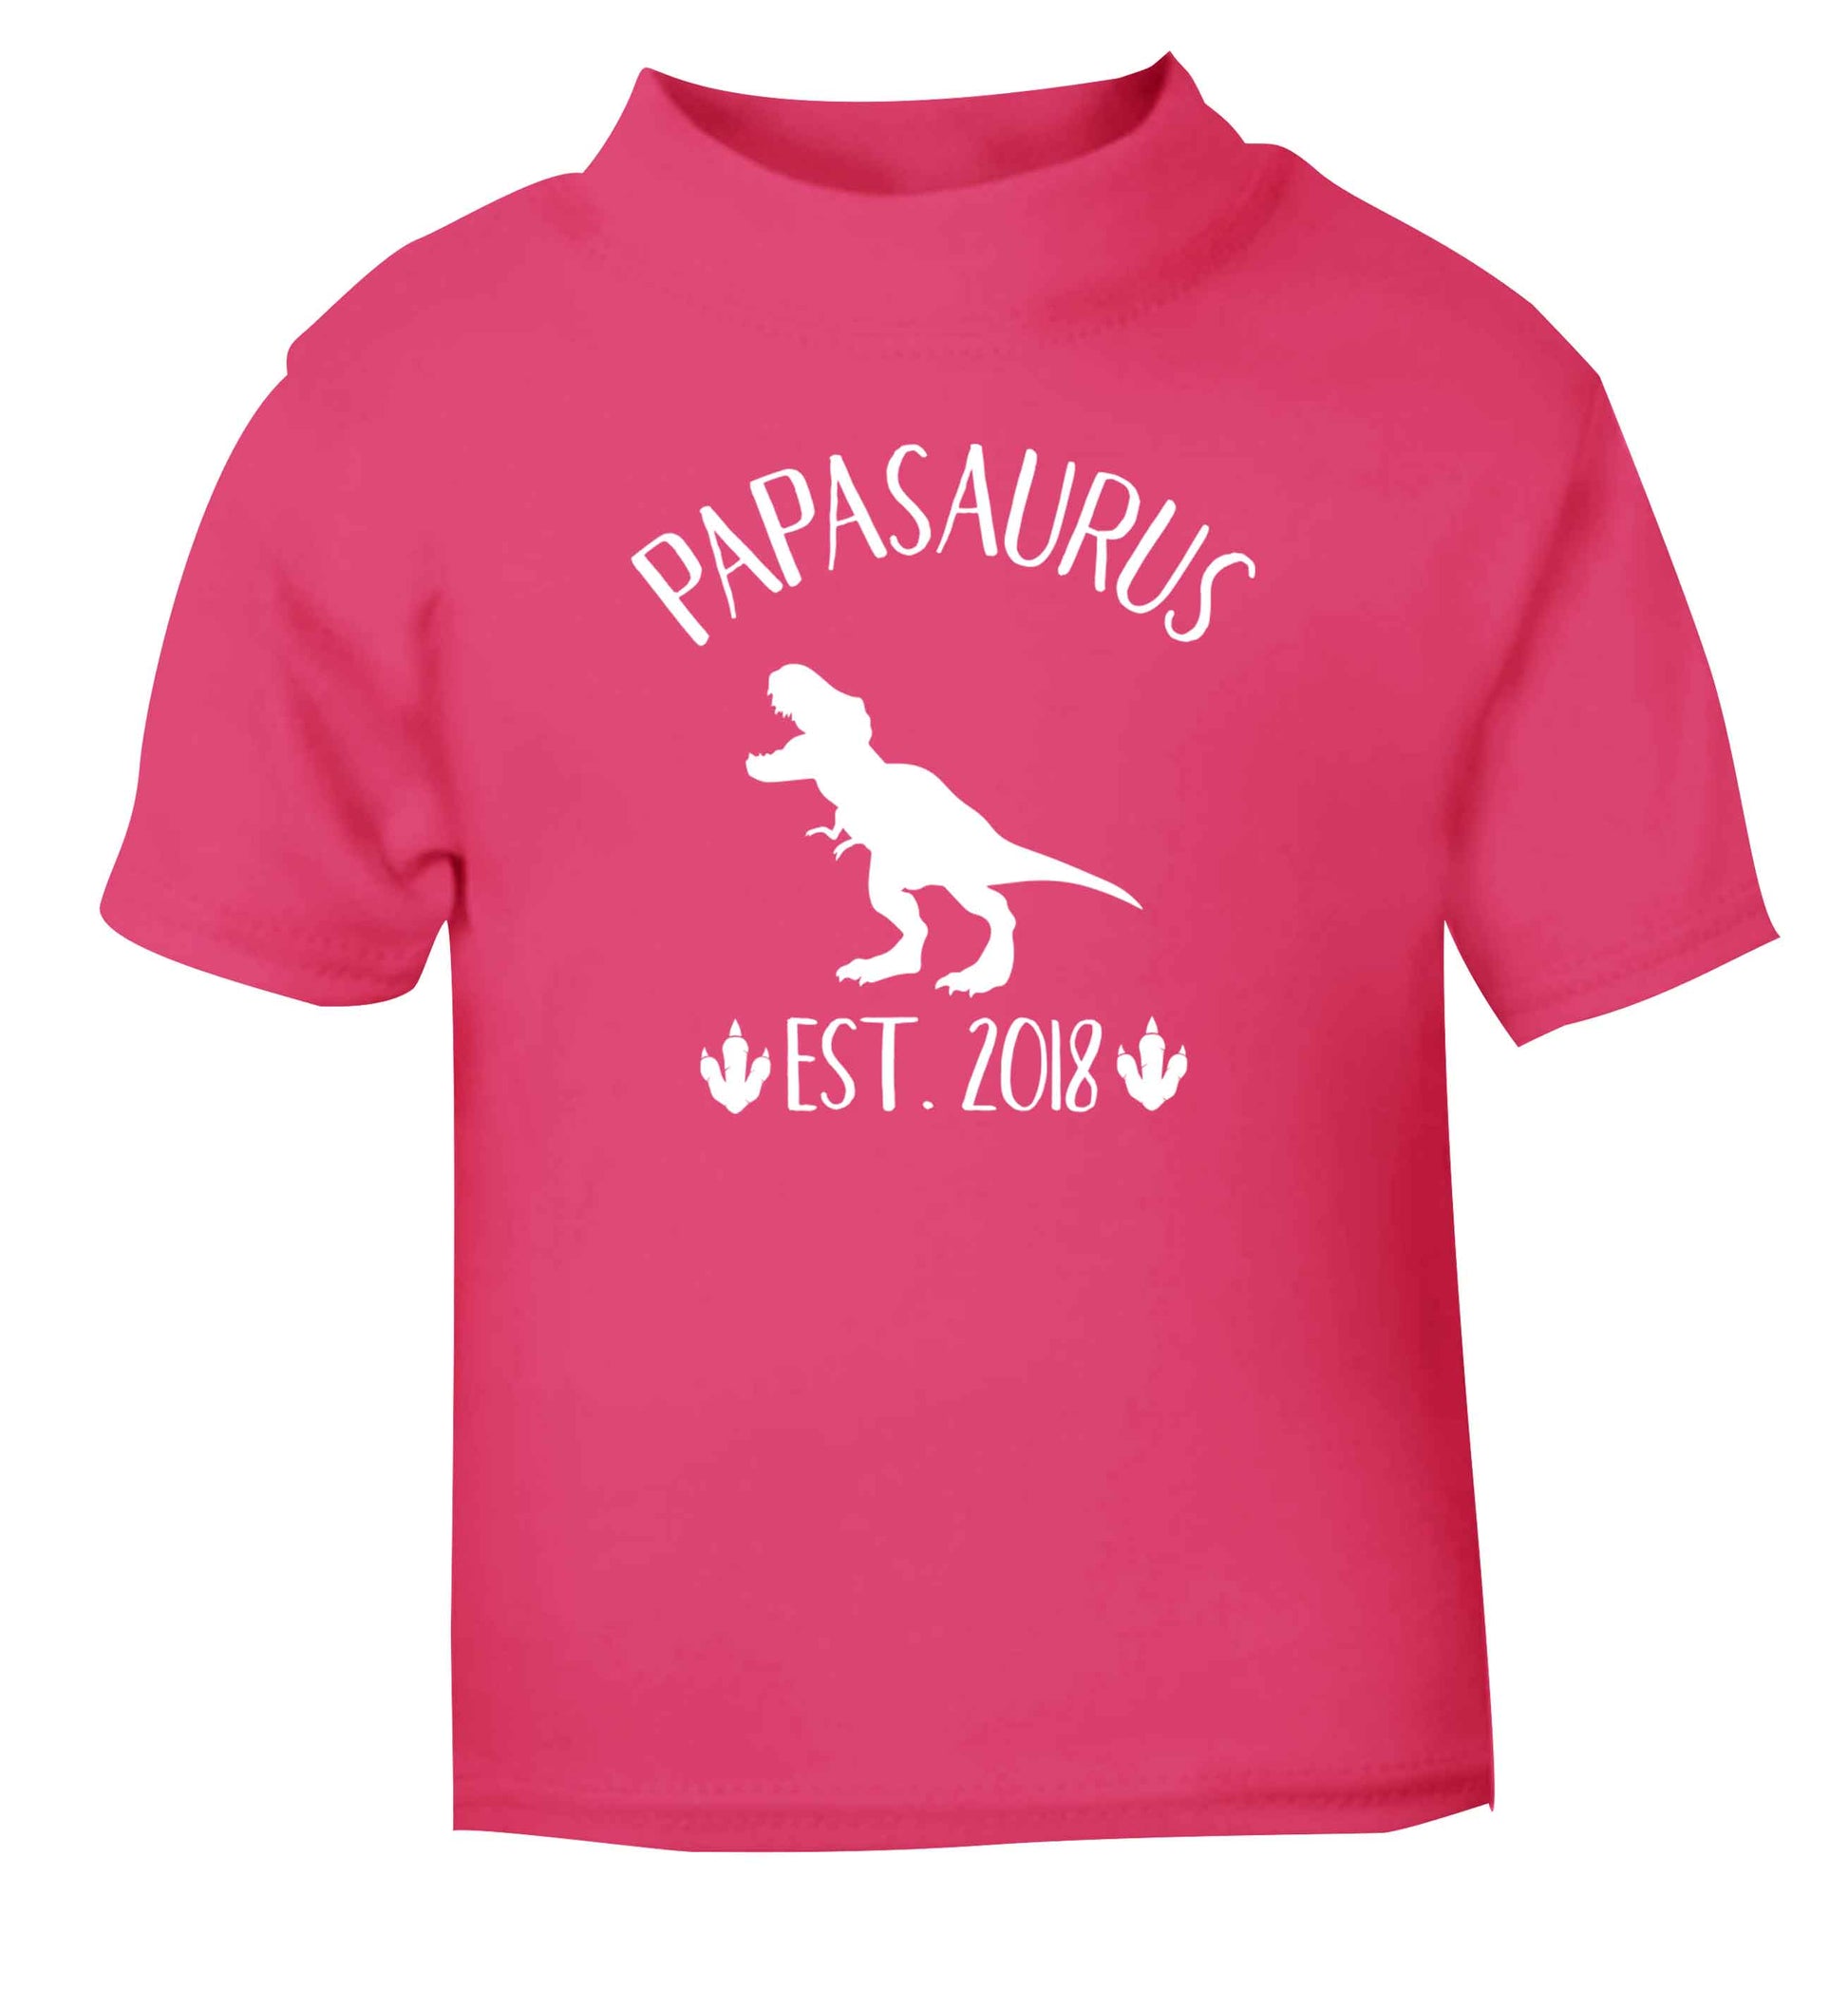 Personalised papasaurus since (custom date) pink Baby Toddler Tshirt 2 Years